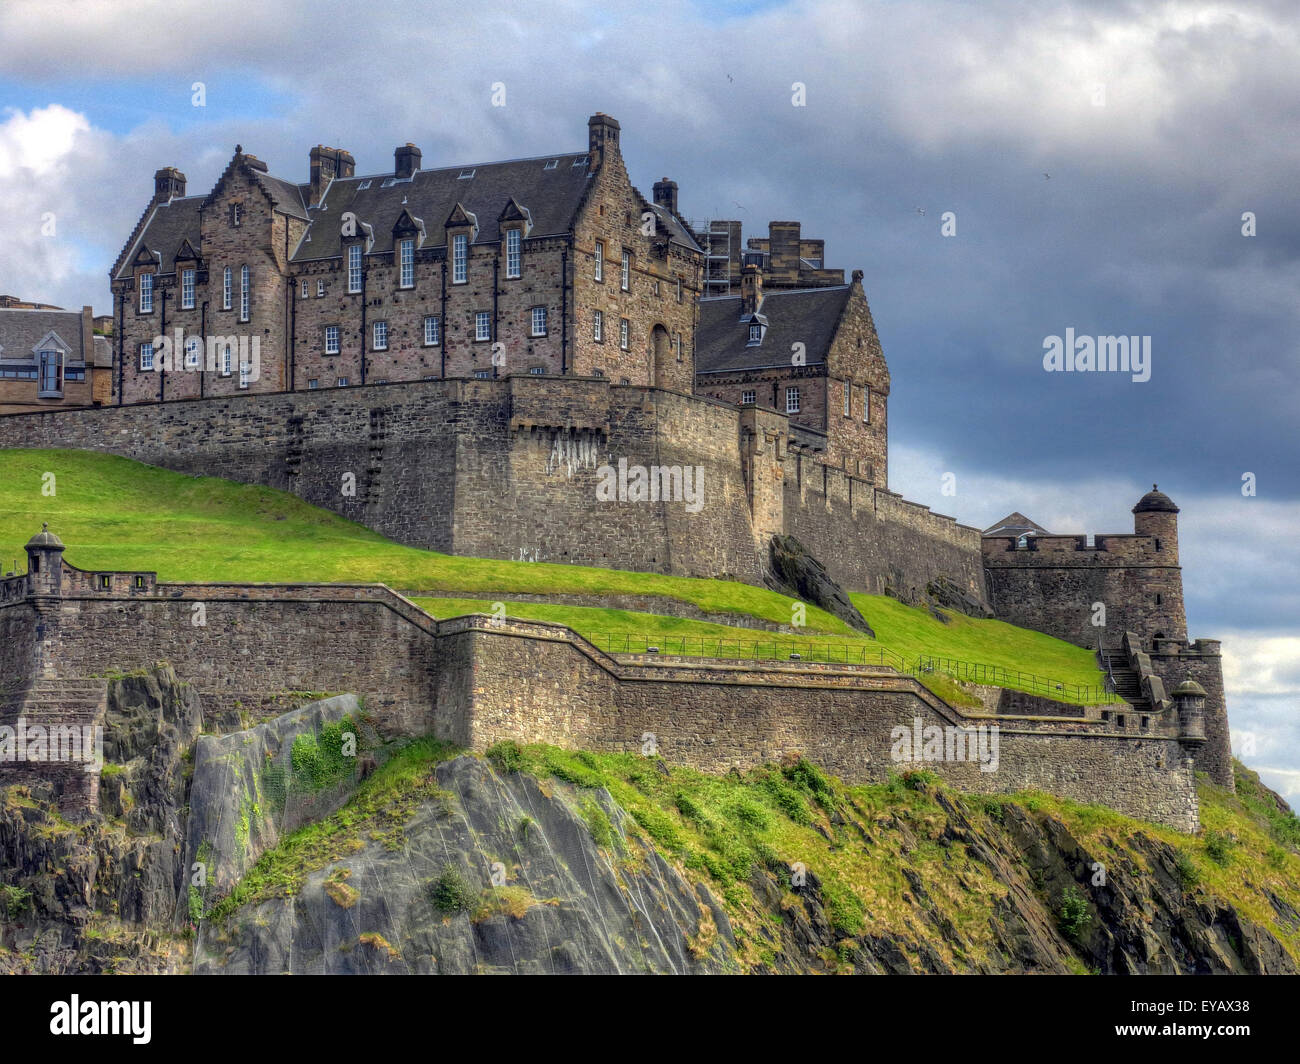 Edinburgh Castle with Dramatic sky, Old Town, Scotland - Unesco world heritage site, UK Stock Photo